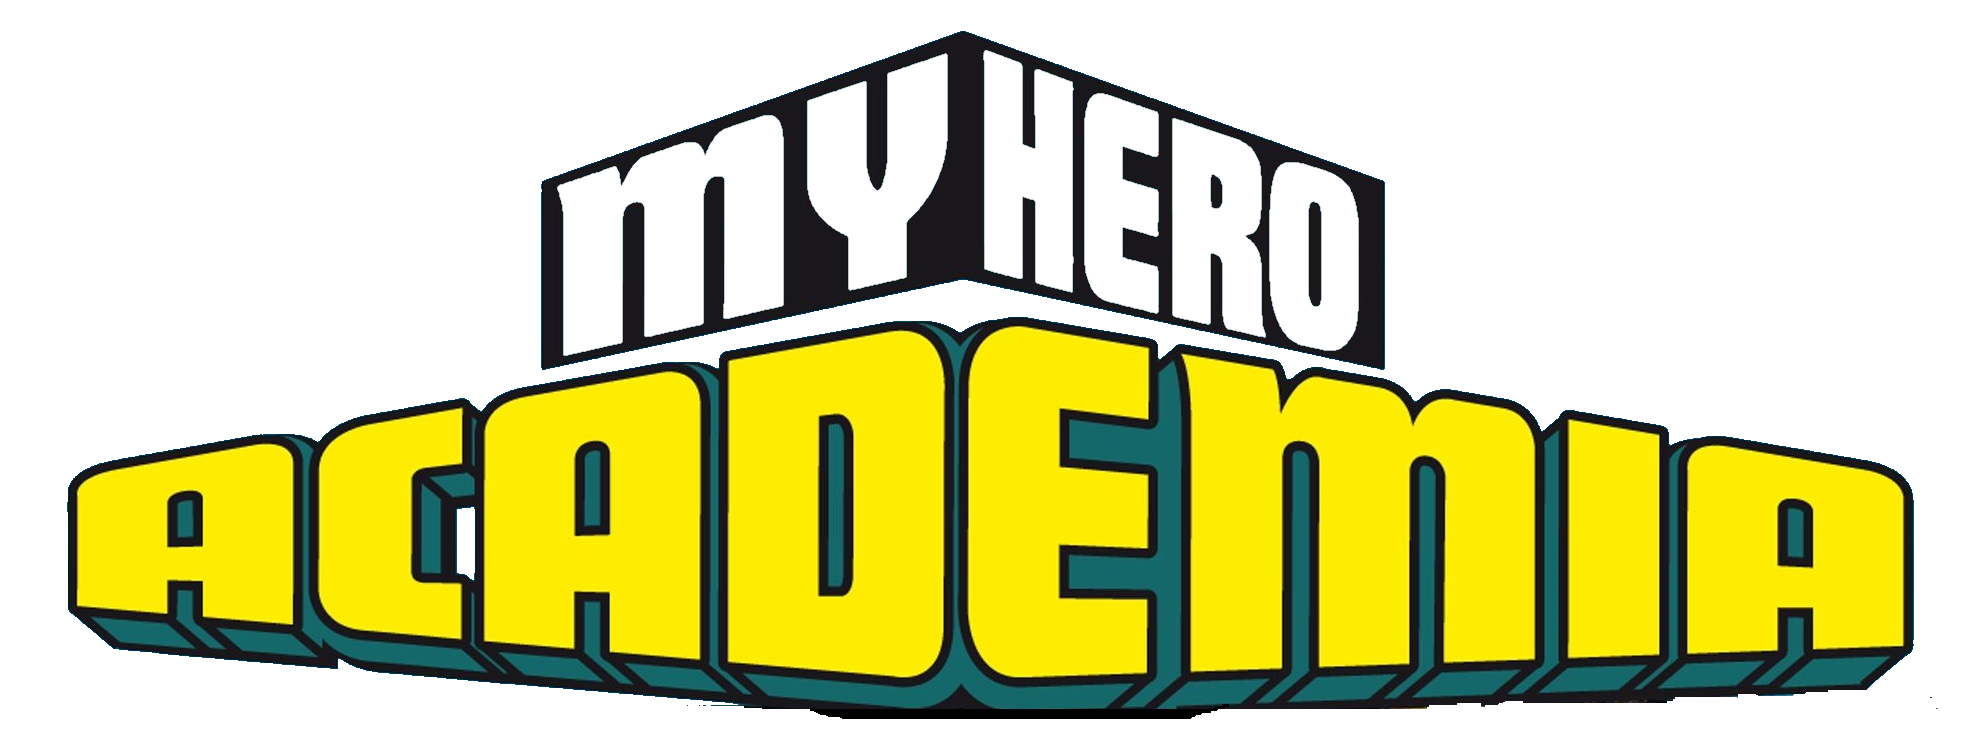 My Hero Academia Logo PNG Pic